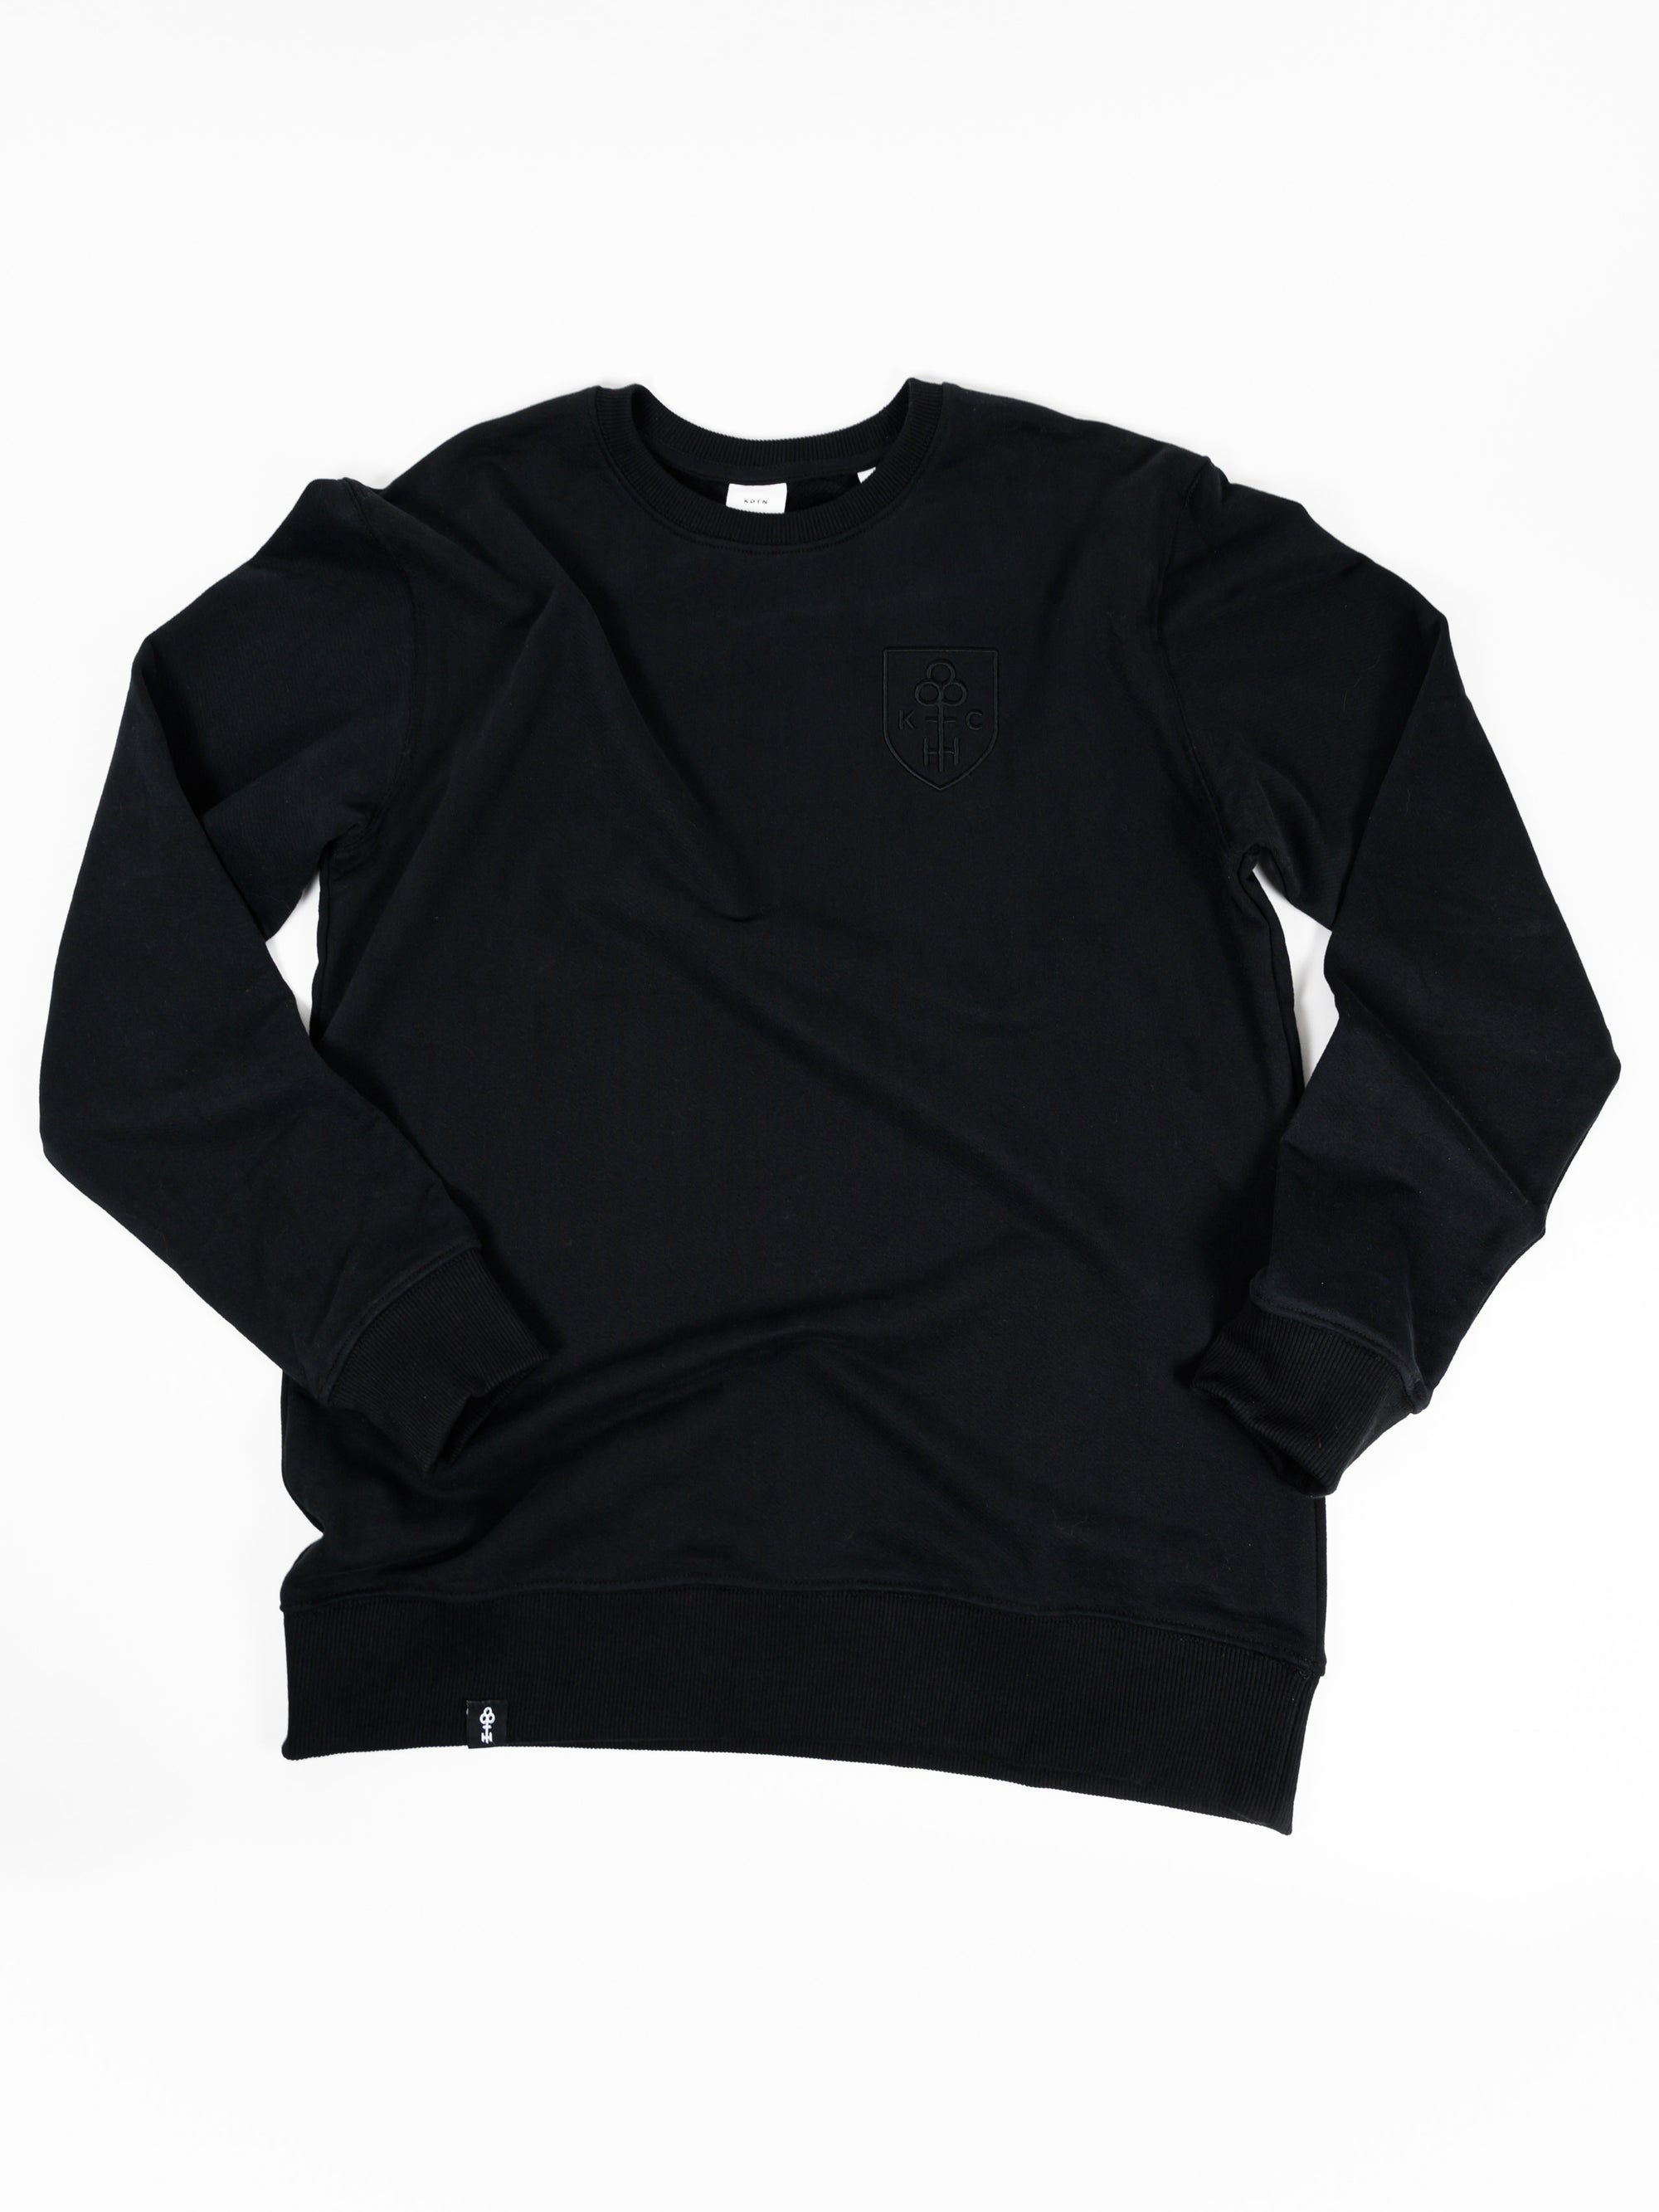 Crest Sweatshirt (Black)